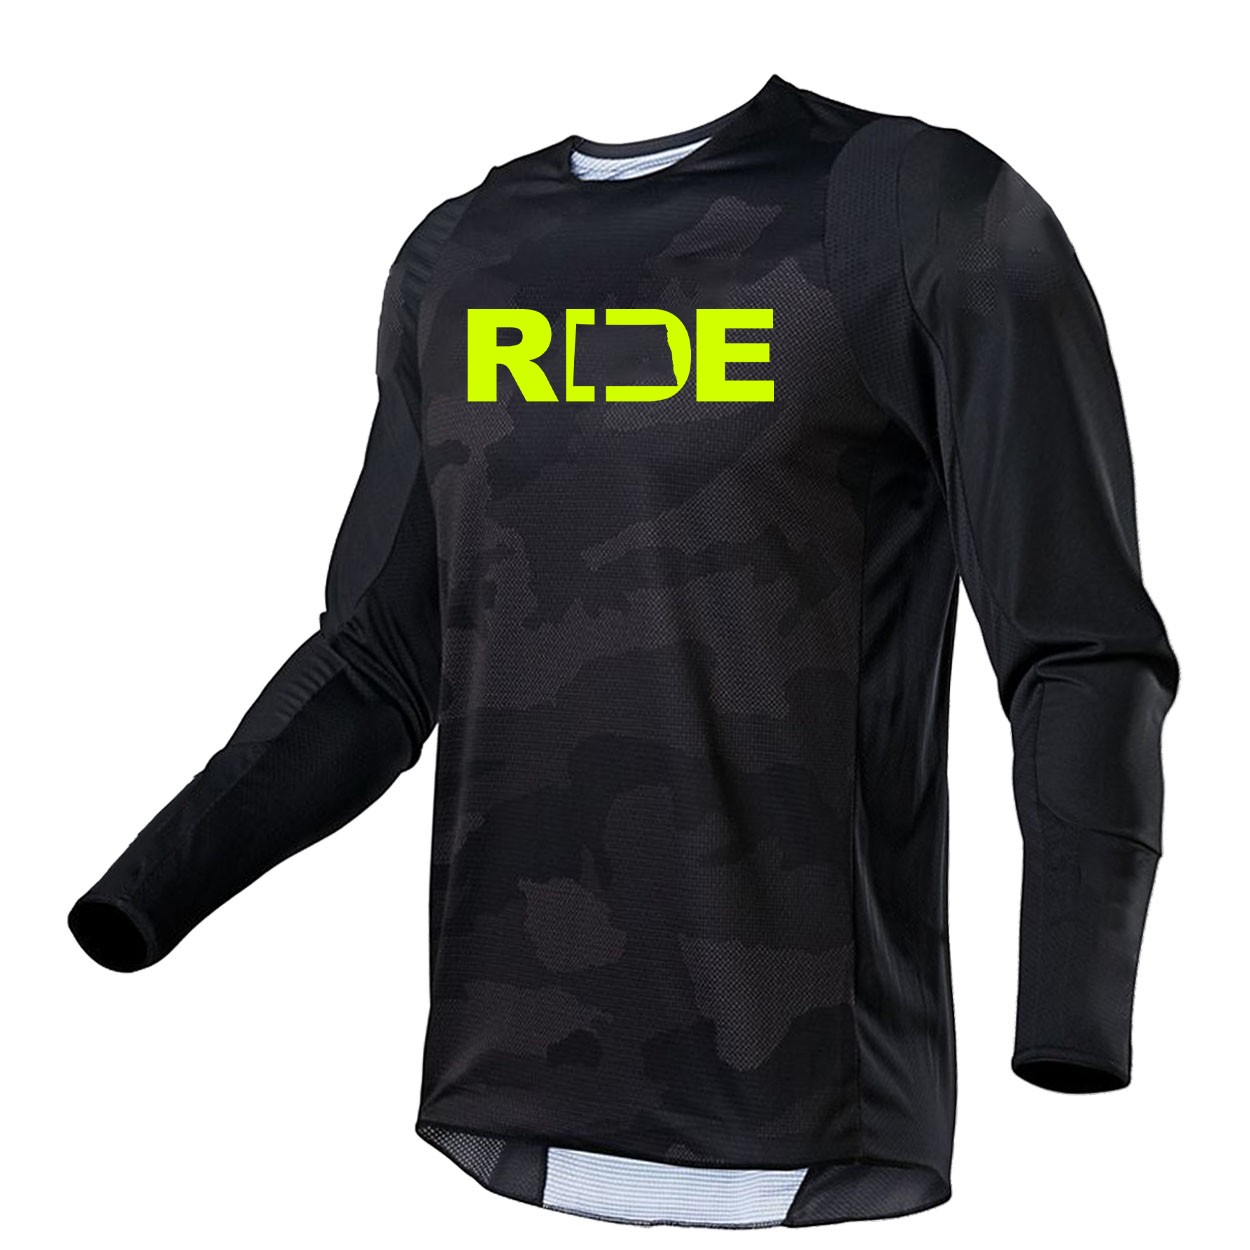 Ride North Dakota Classic Performance Jersey Long Sleeve Shirt Black Camo (Hi-Vis Logo)